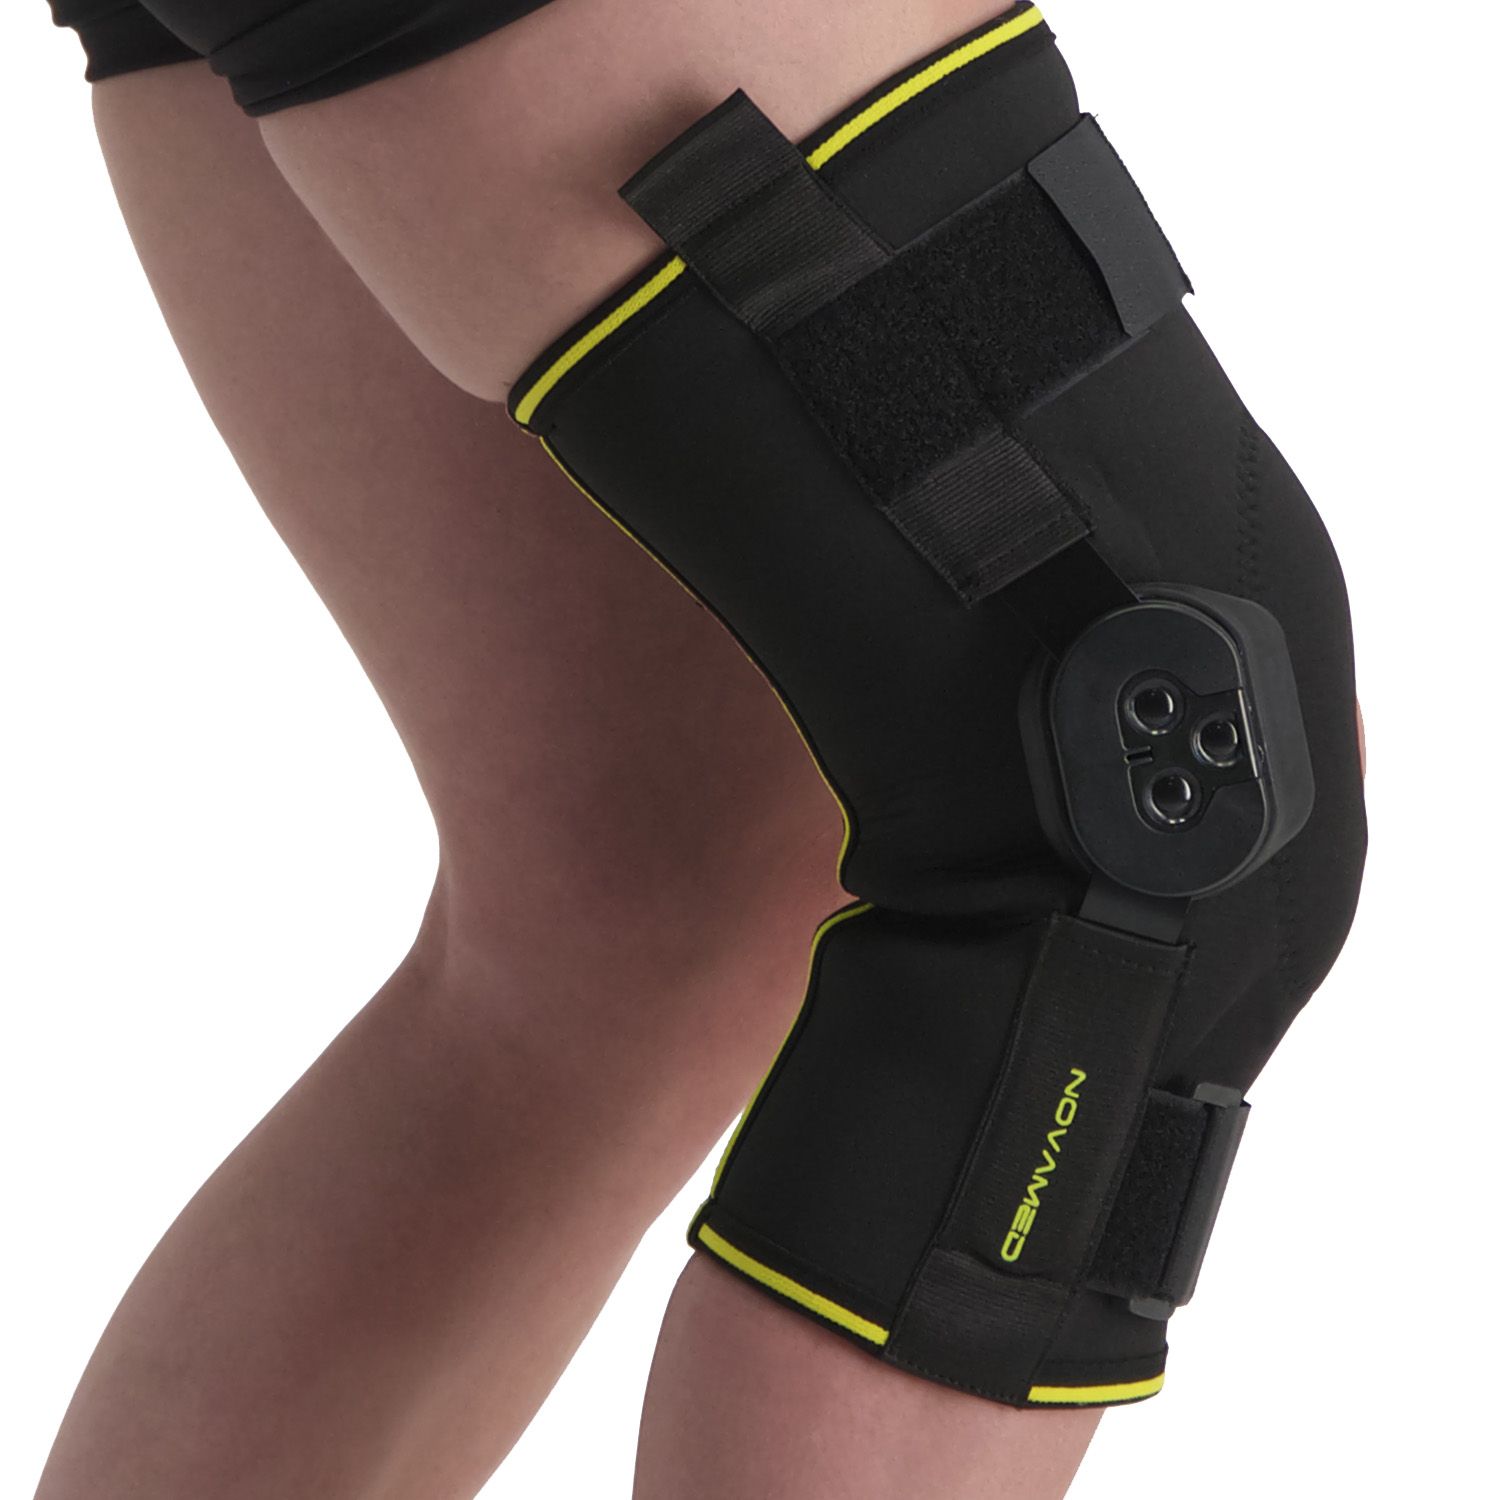 novamed knee support with adjustable hinges side view